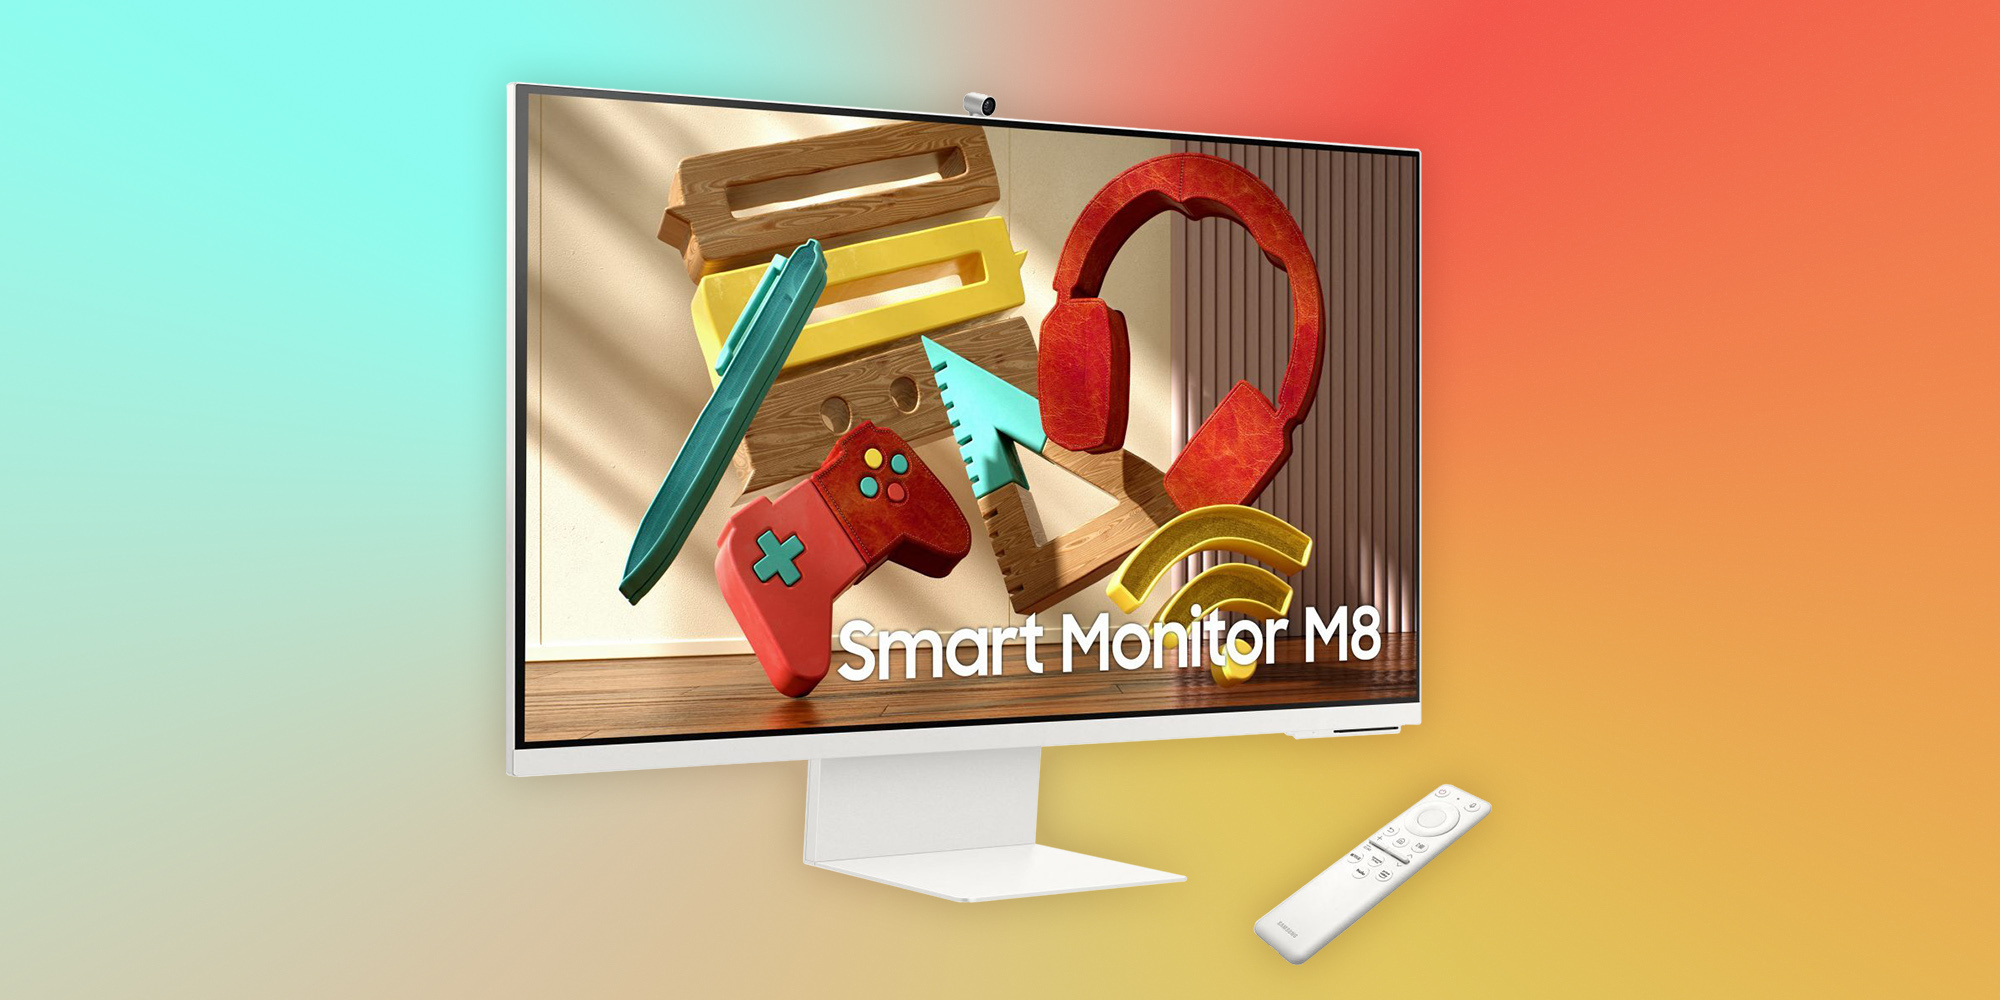 Samsung Smart Monitor M8 AirPlay, дизайн в стиле iMac